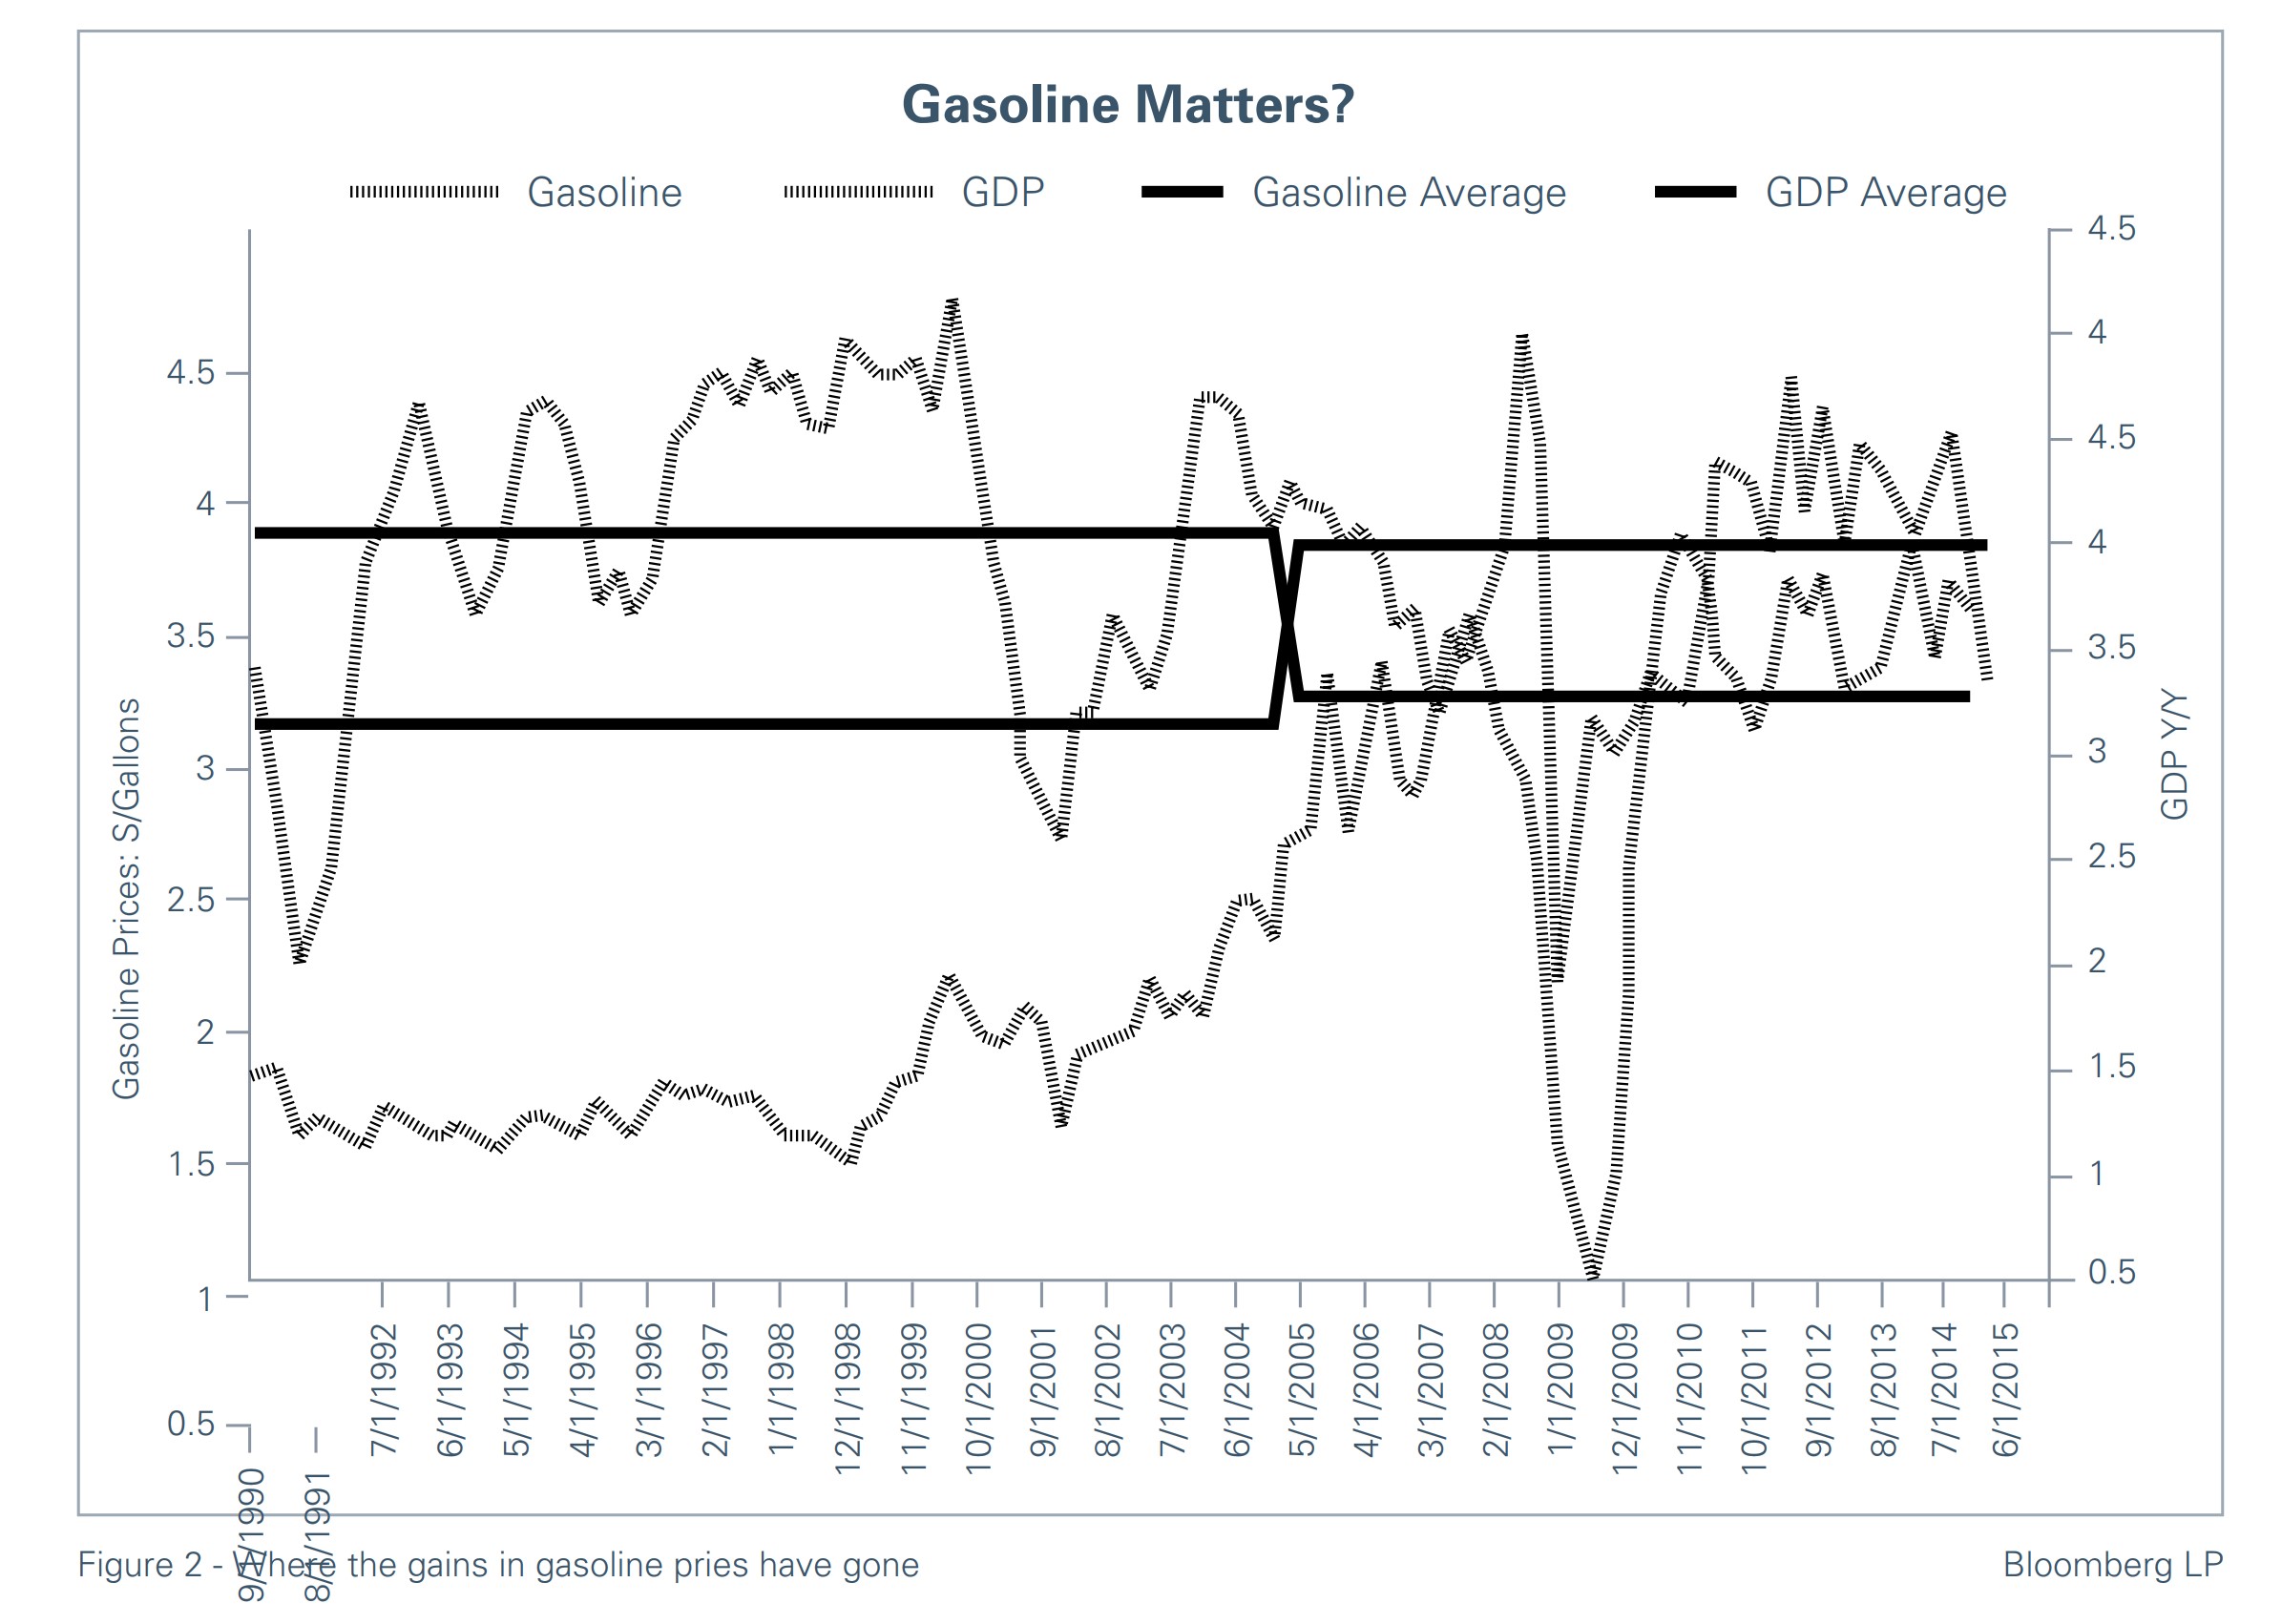 gasoline matters Bloomberg LP 2015